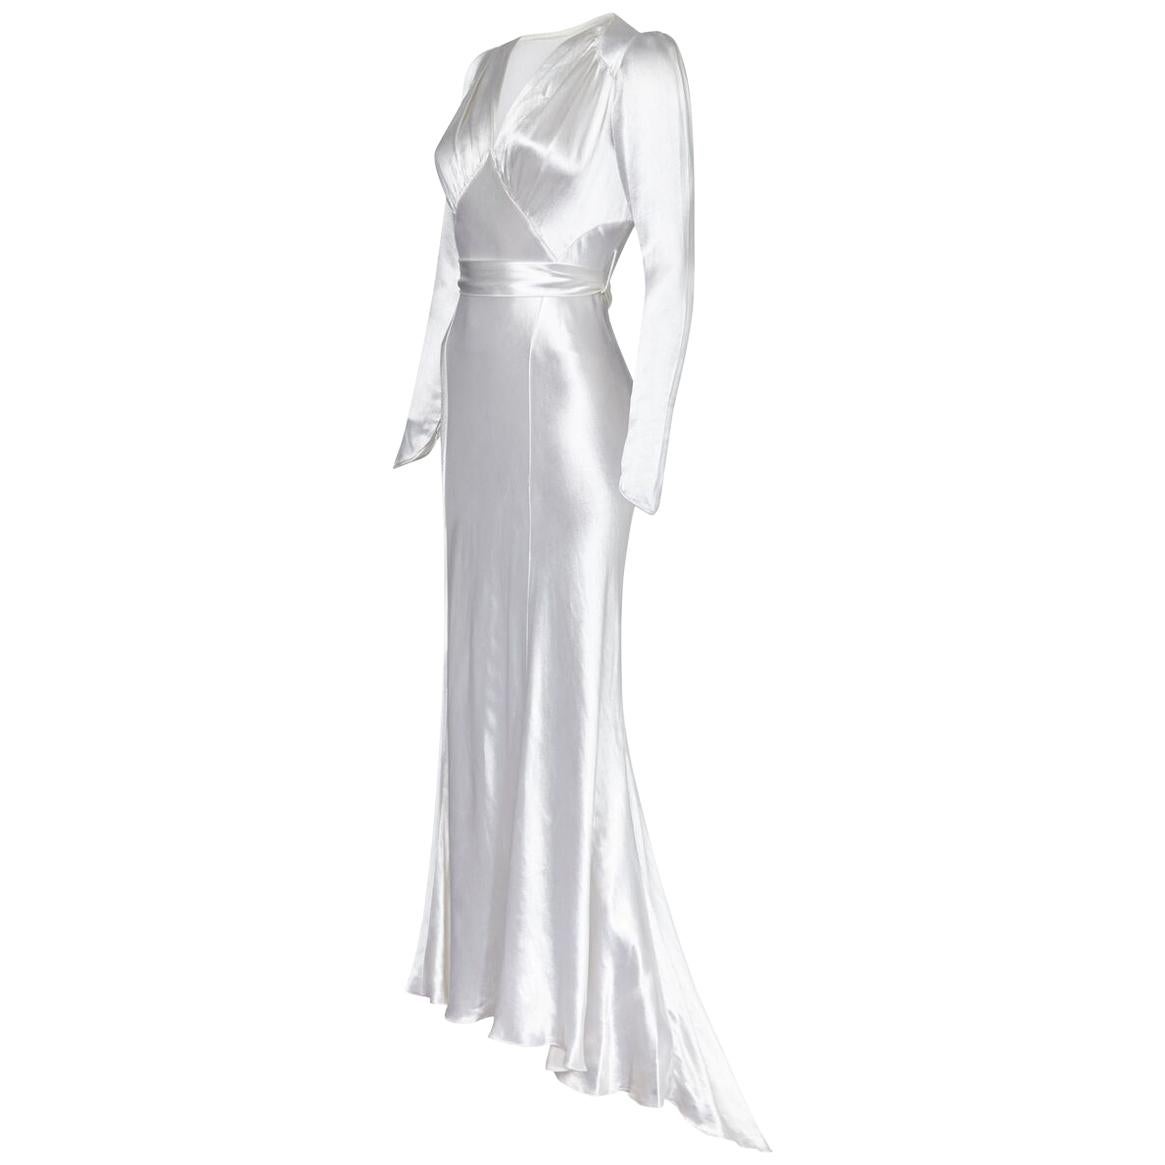 Original White Silk Satin Bias Cut Wedding Dress with Long Sleeves, 1930s